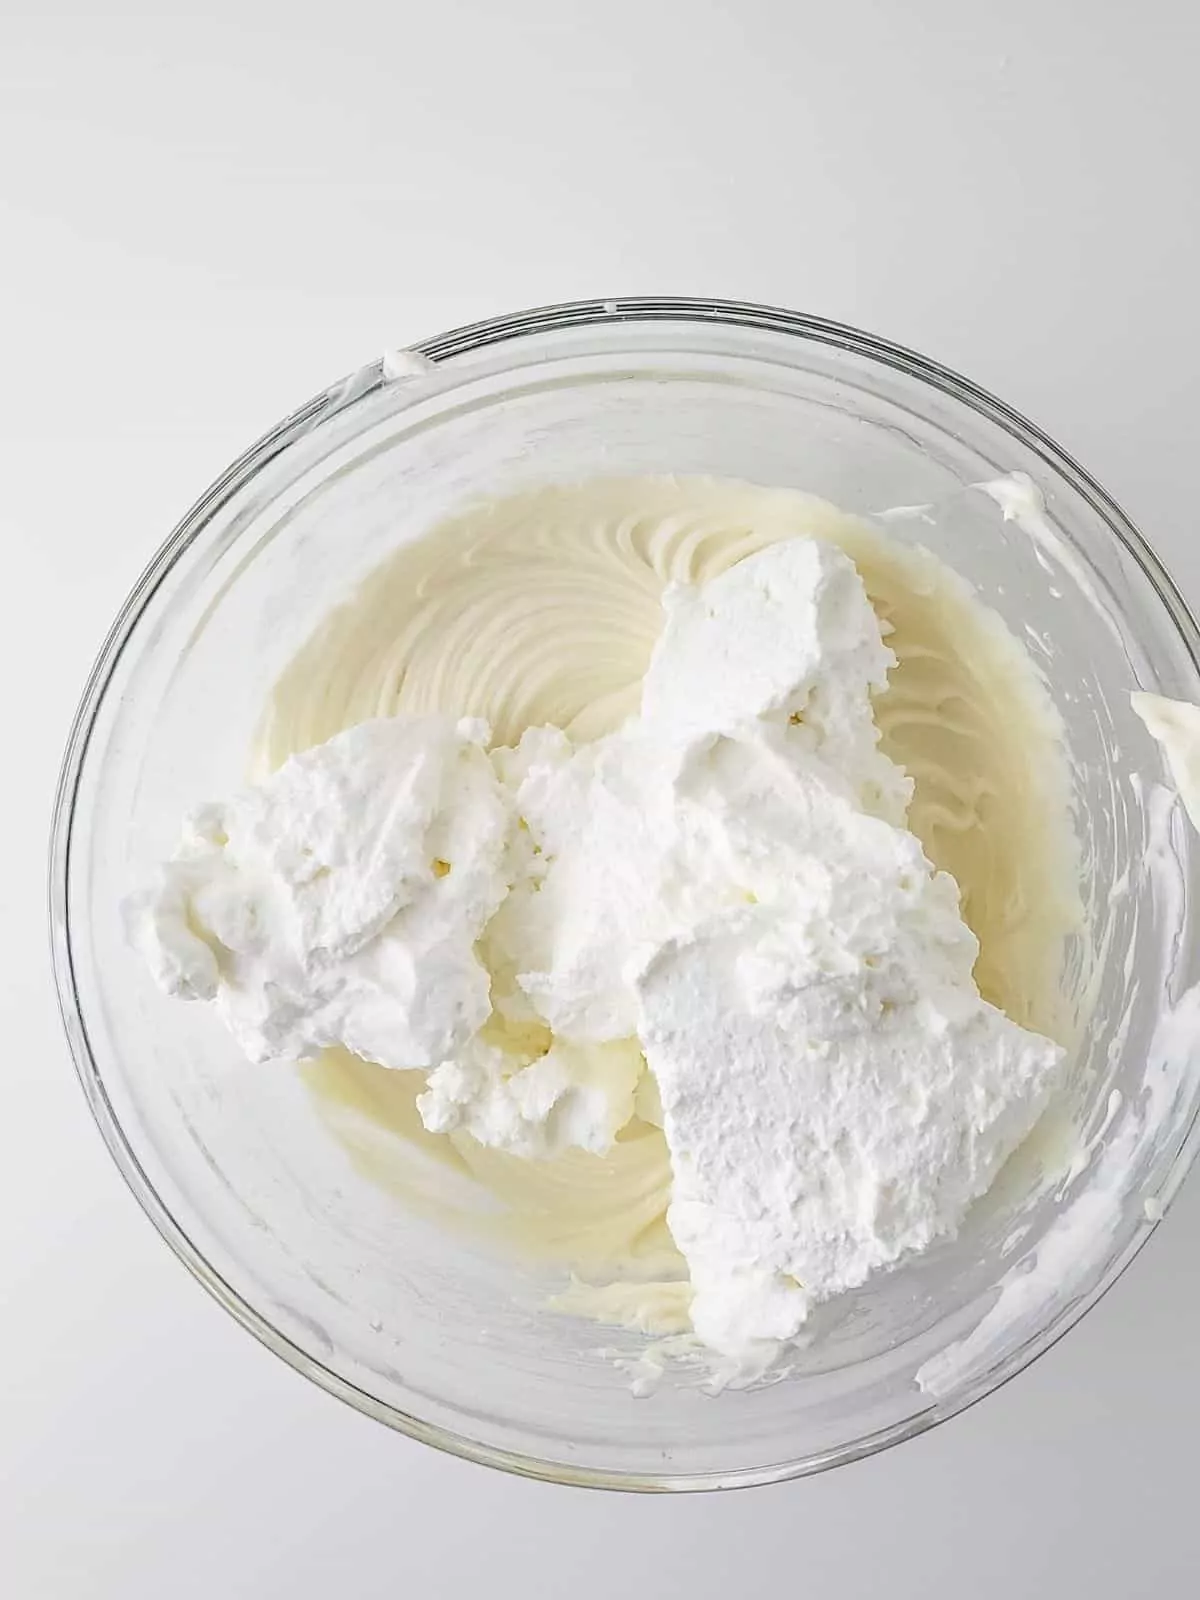 adding whipped cream to cream cheese mixture.